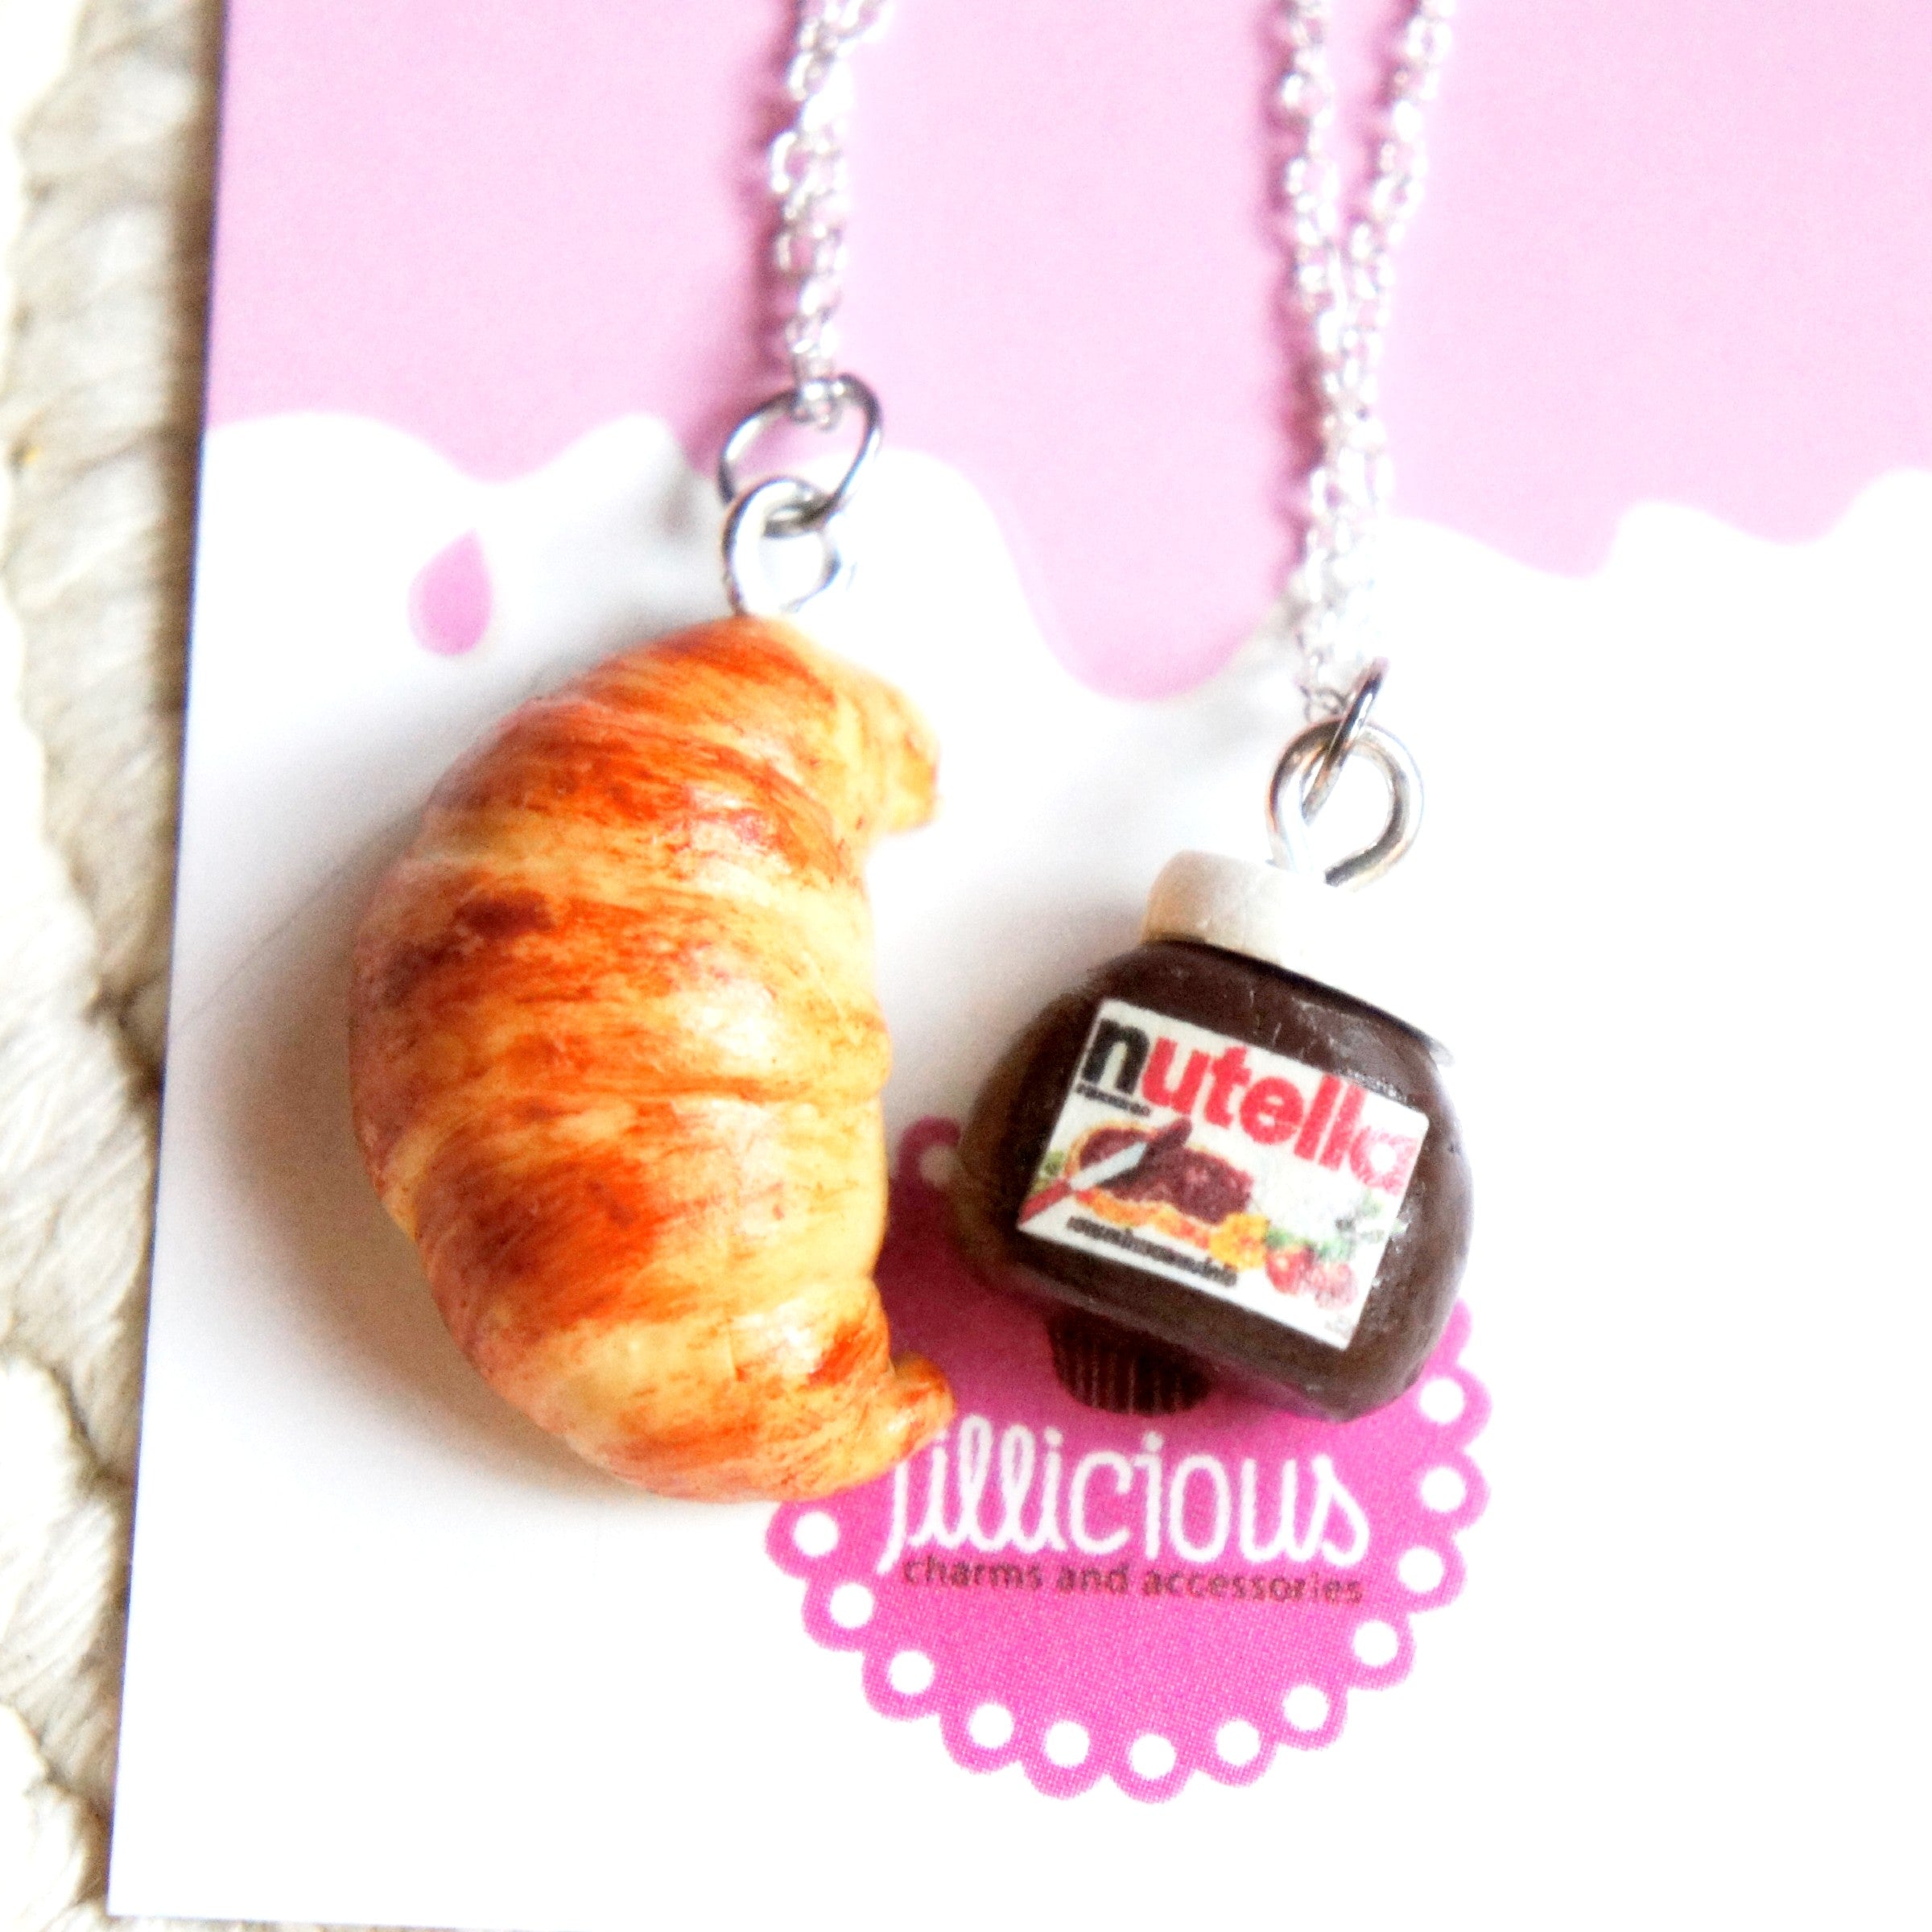 Nutella and Croissant Friendship Necklace Set